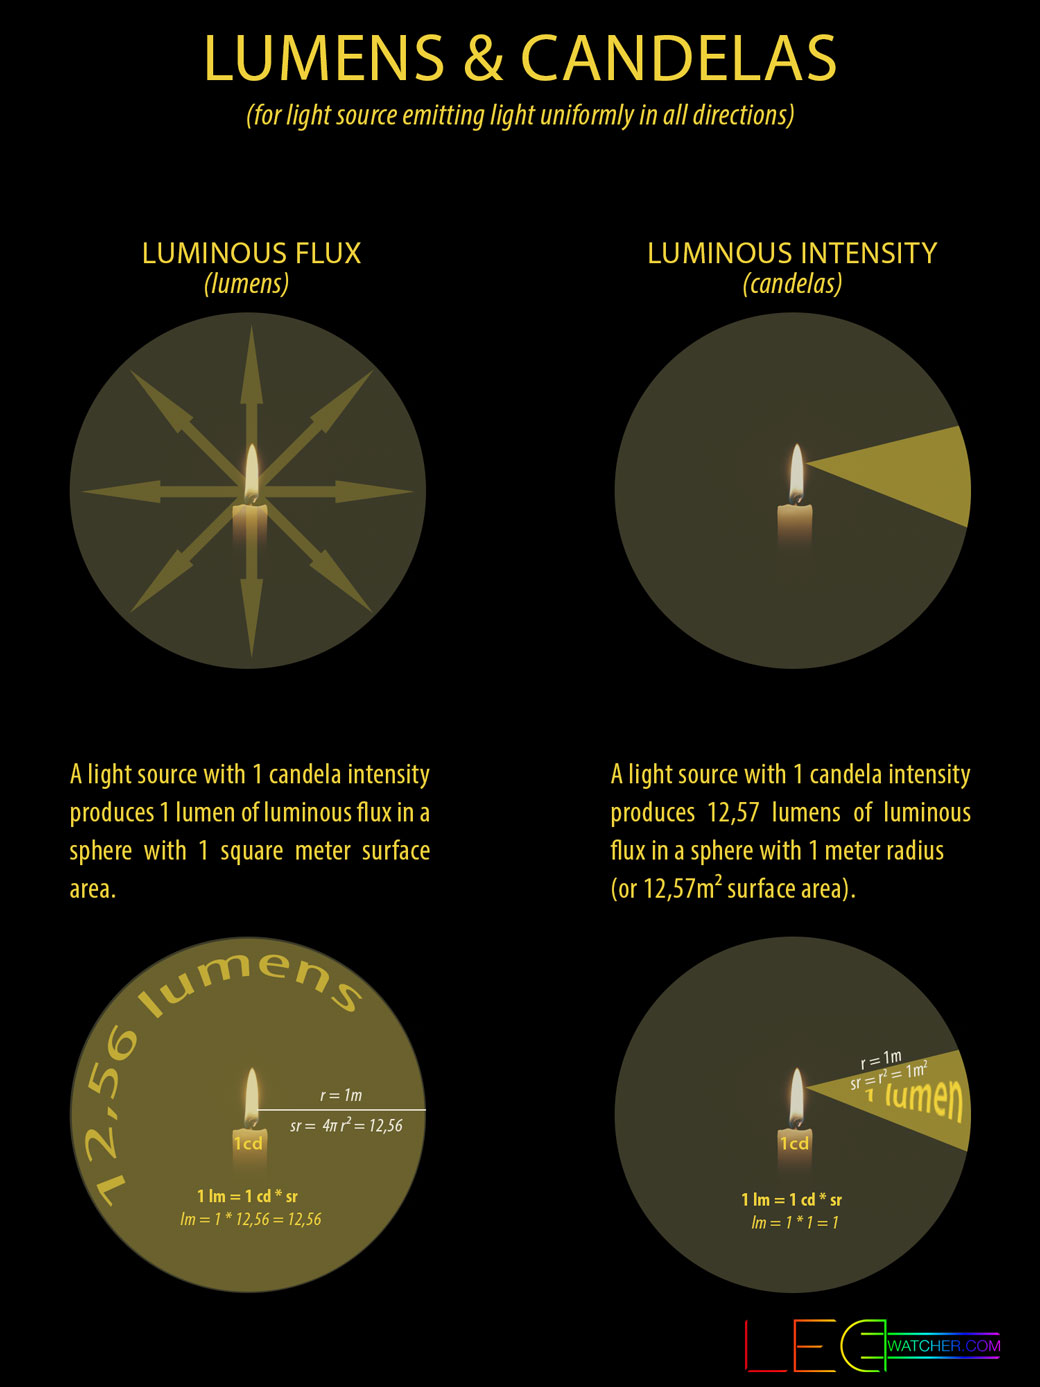 illuminous. or luminous meaning